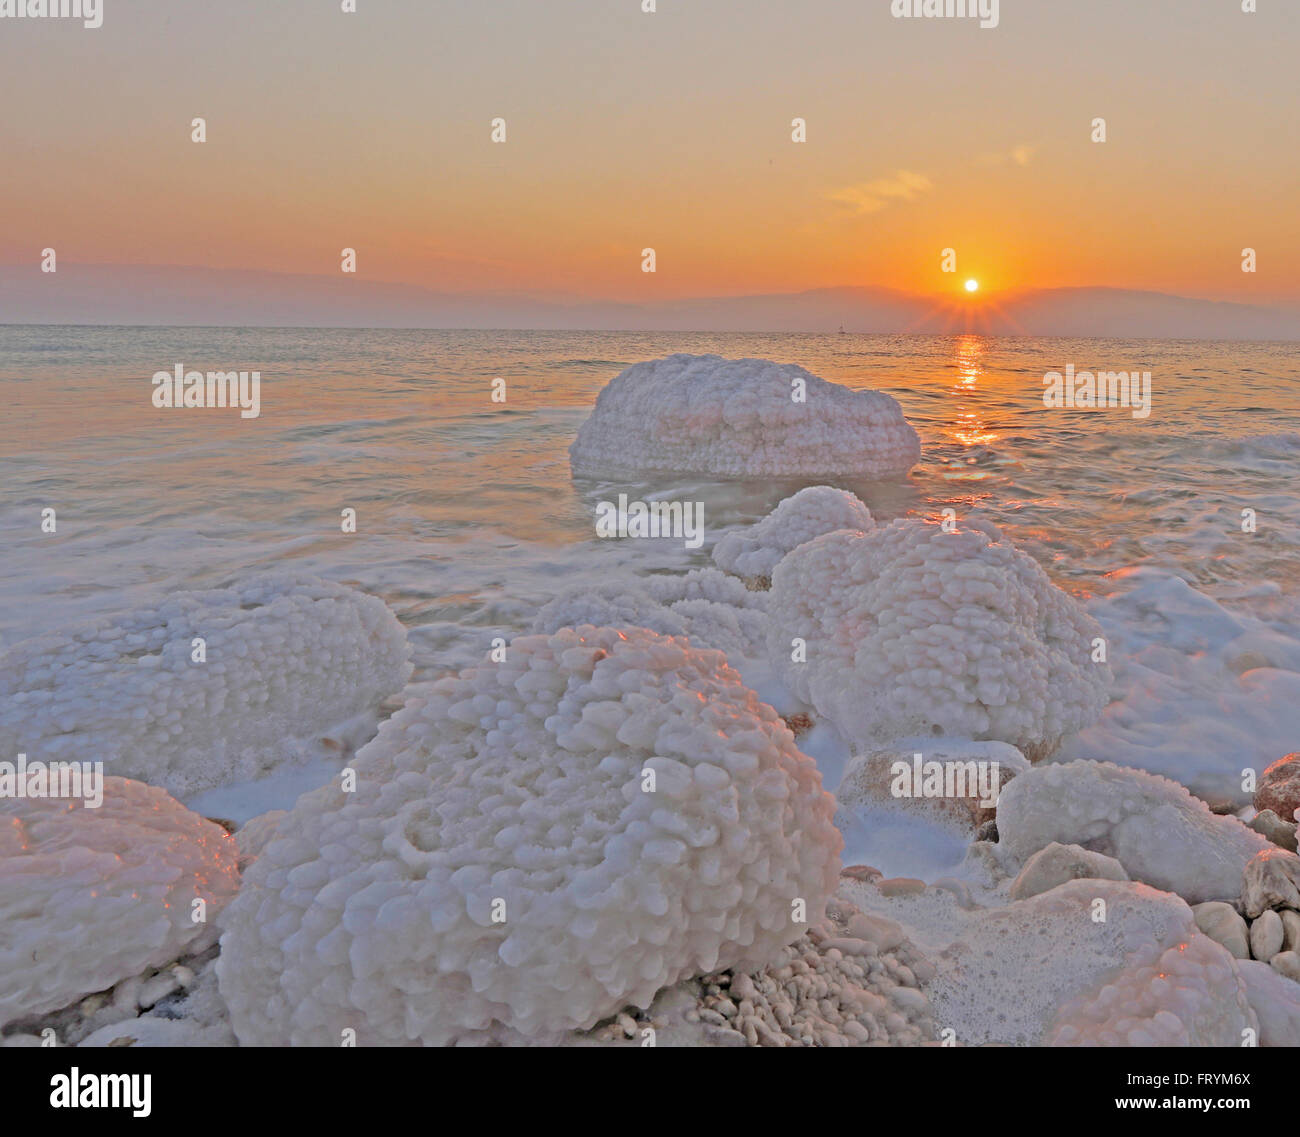 Sun rising over the Dead Sea, Israel Stock Photo